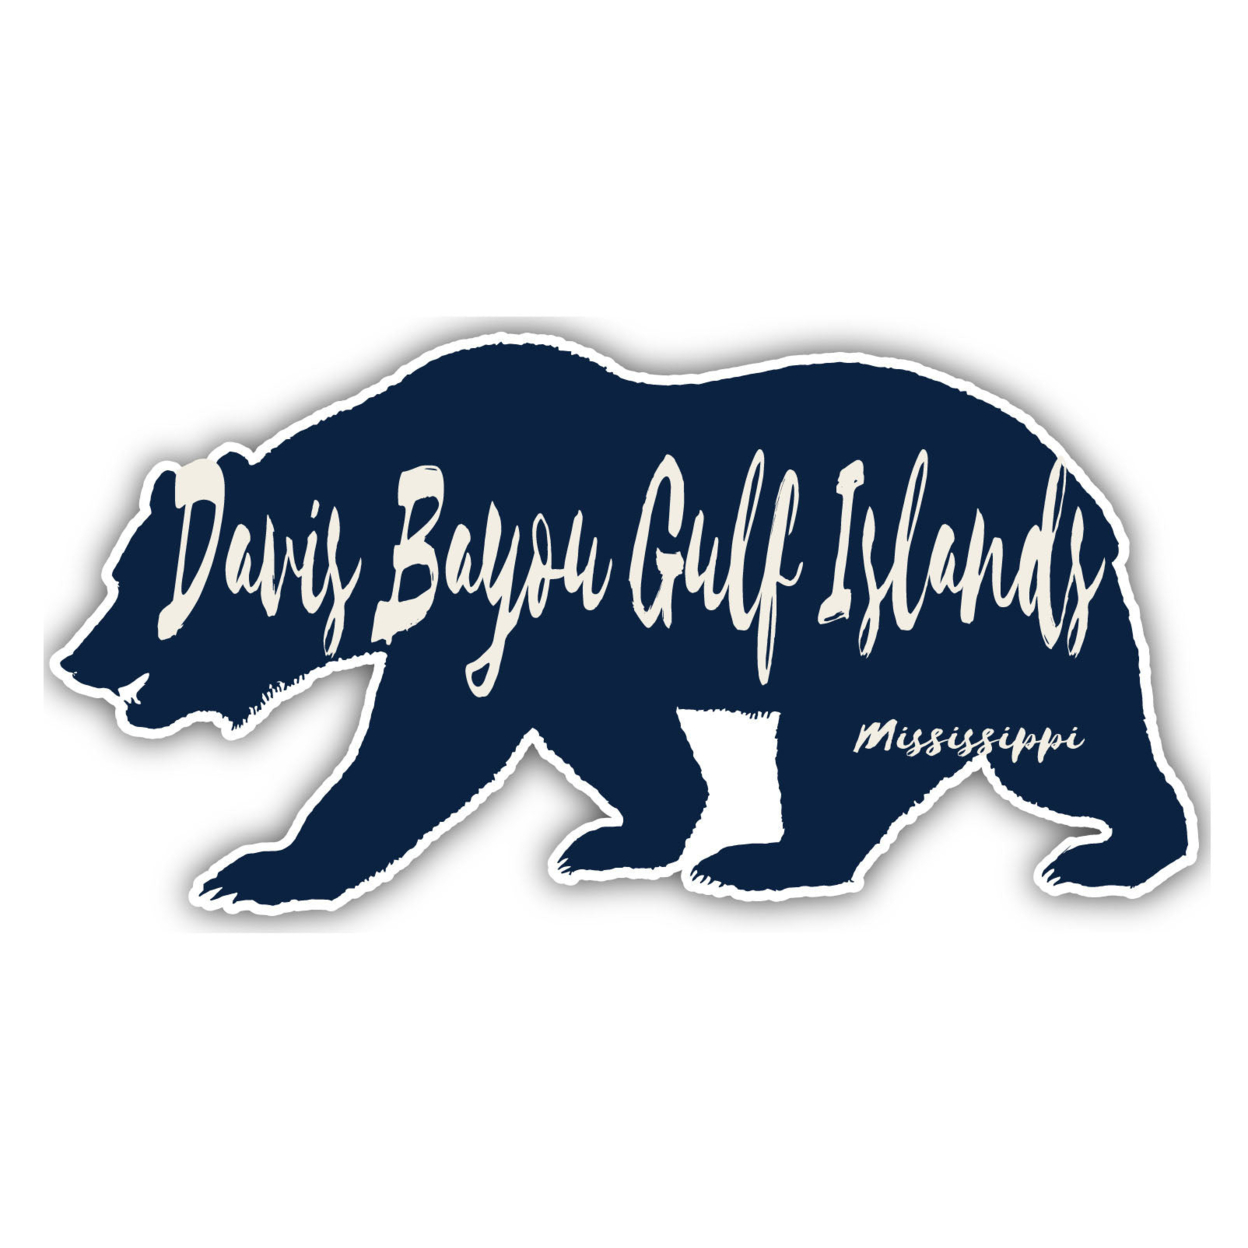 Davis Bayou Gulf Islands Mississippi Souvenir Decorative Stickers (Choose Theme And Size) - 4-Pack, 8-Inch, Bear